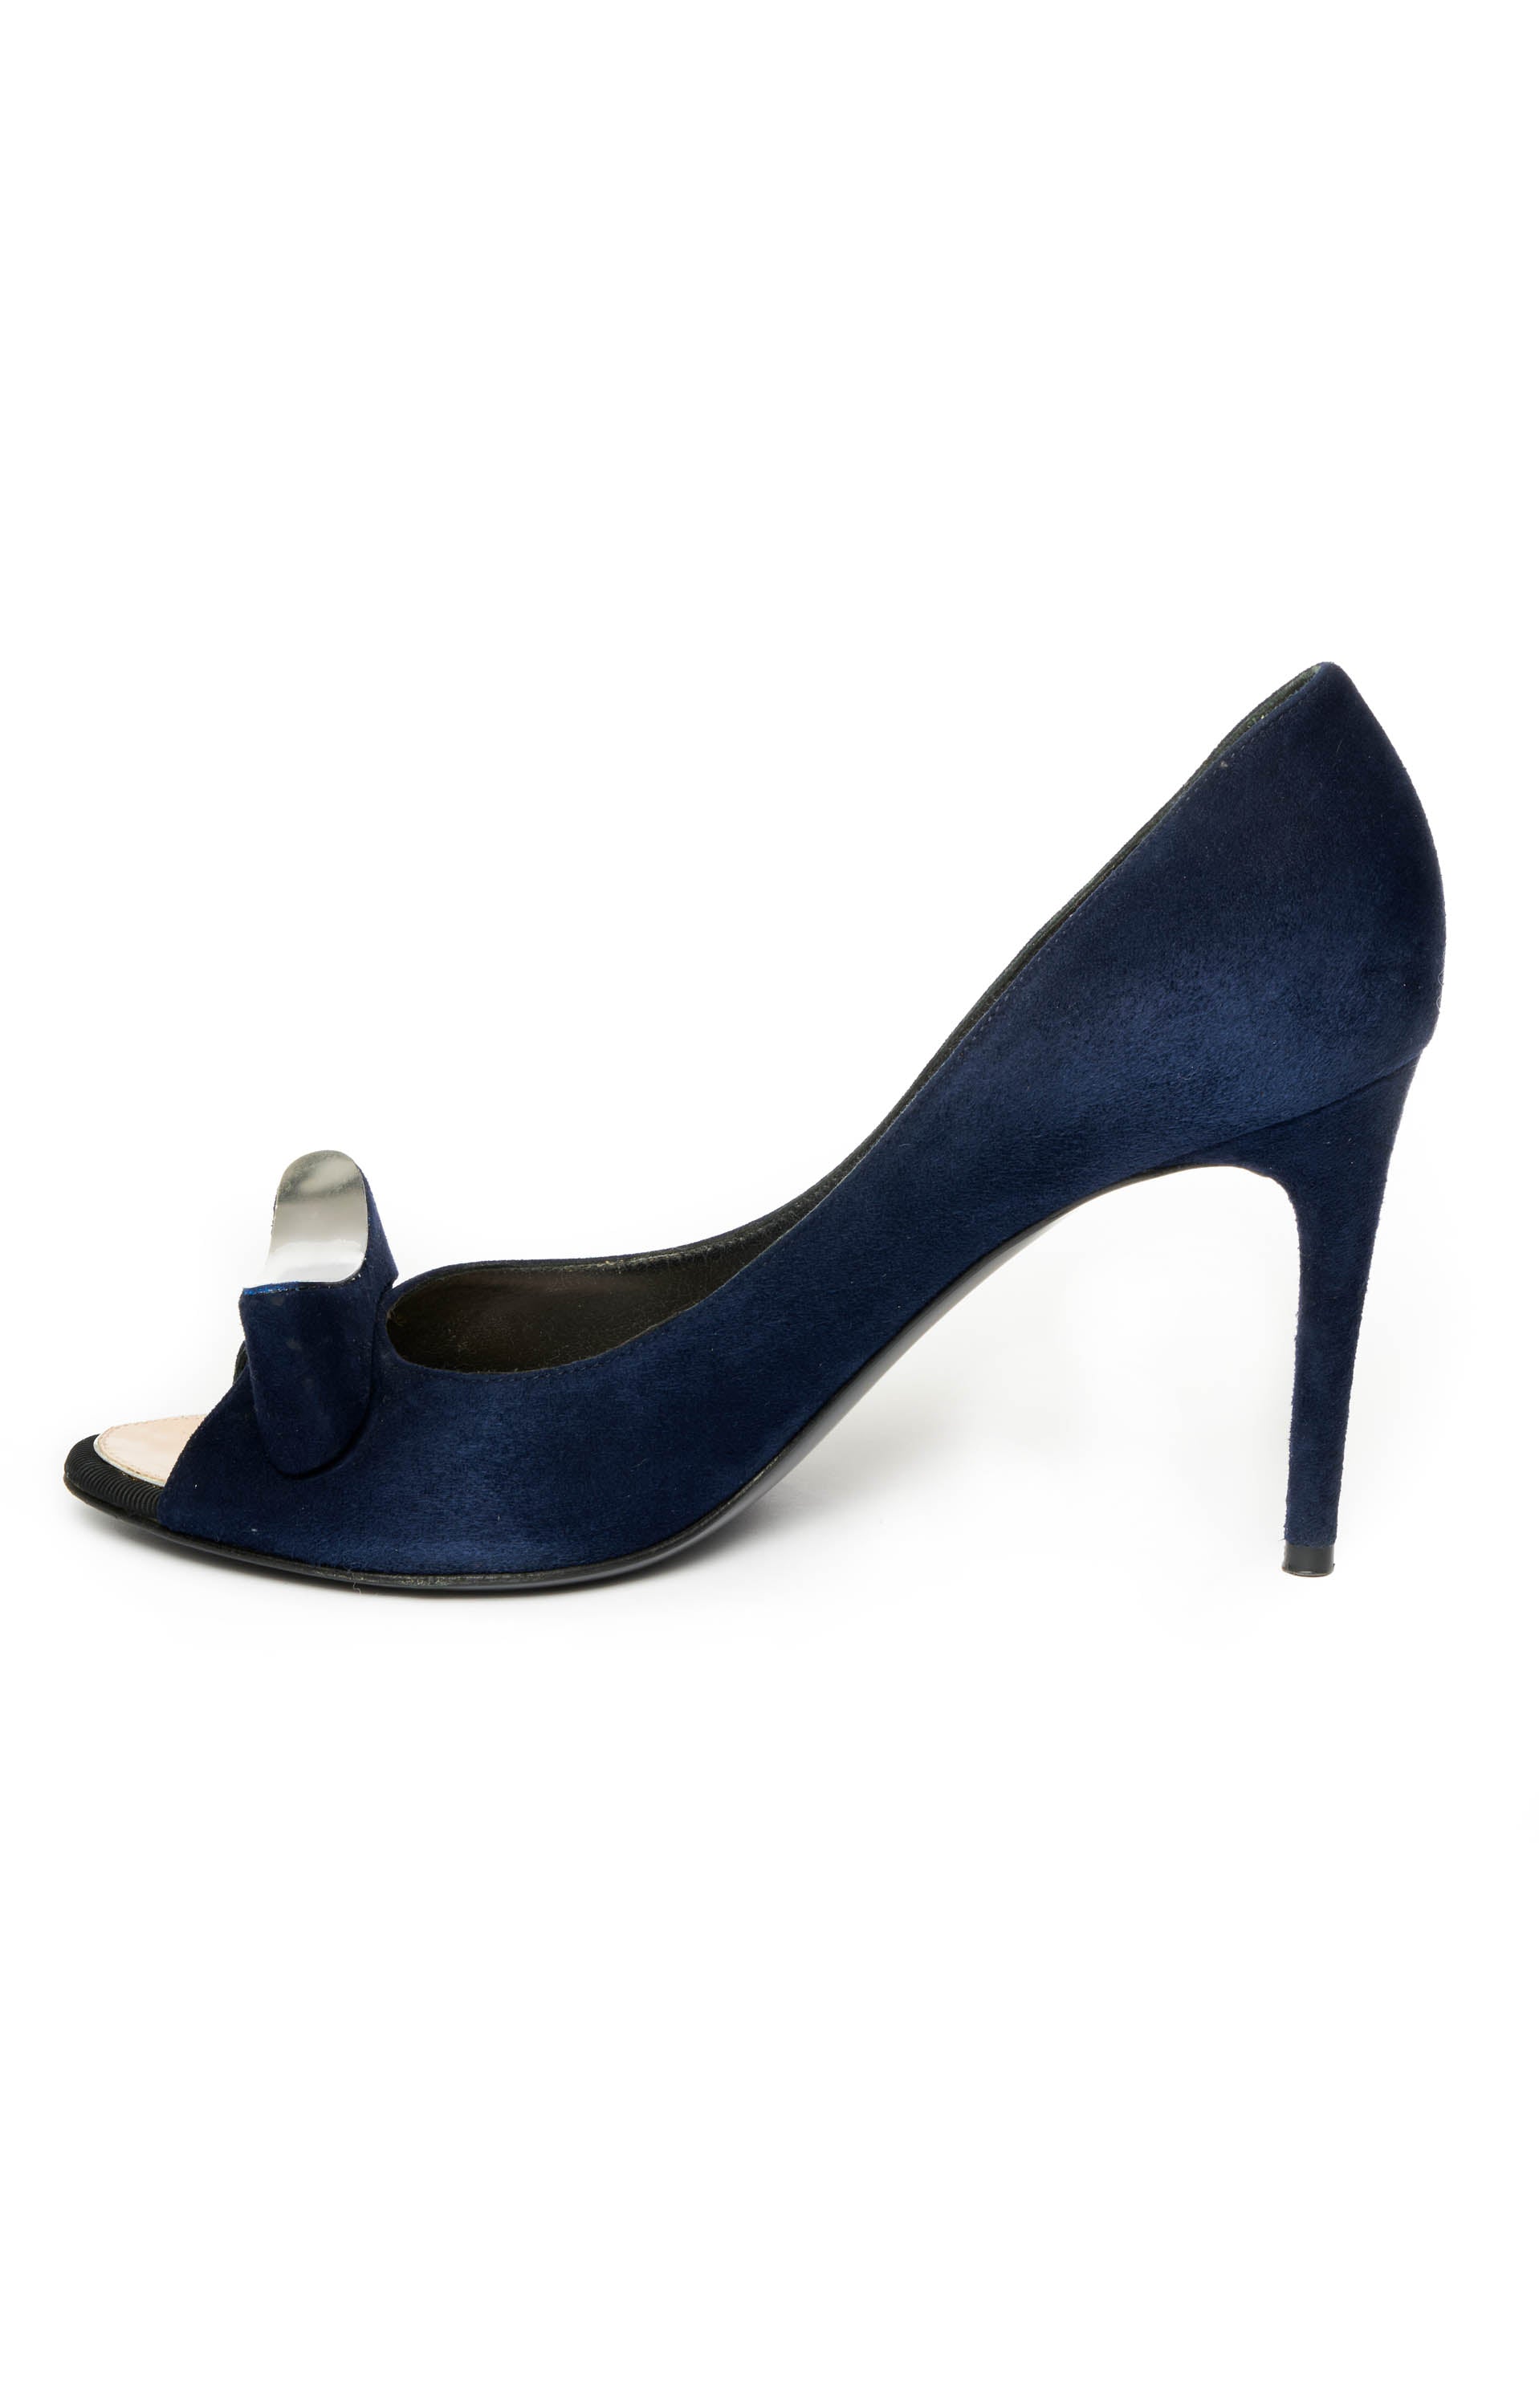 Nina Ricci Blue Suede Peep Toe Pump Size 38 - Foxy Couture Carmel